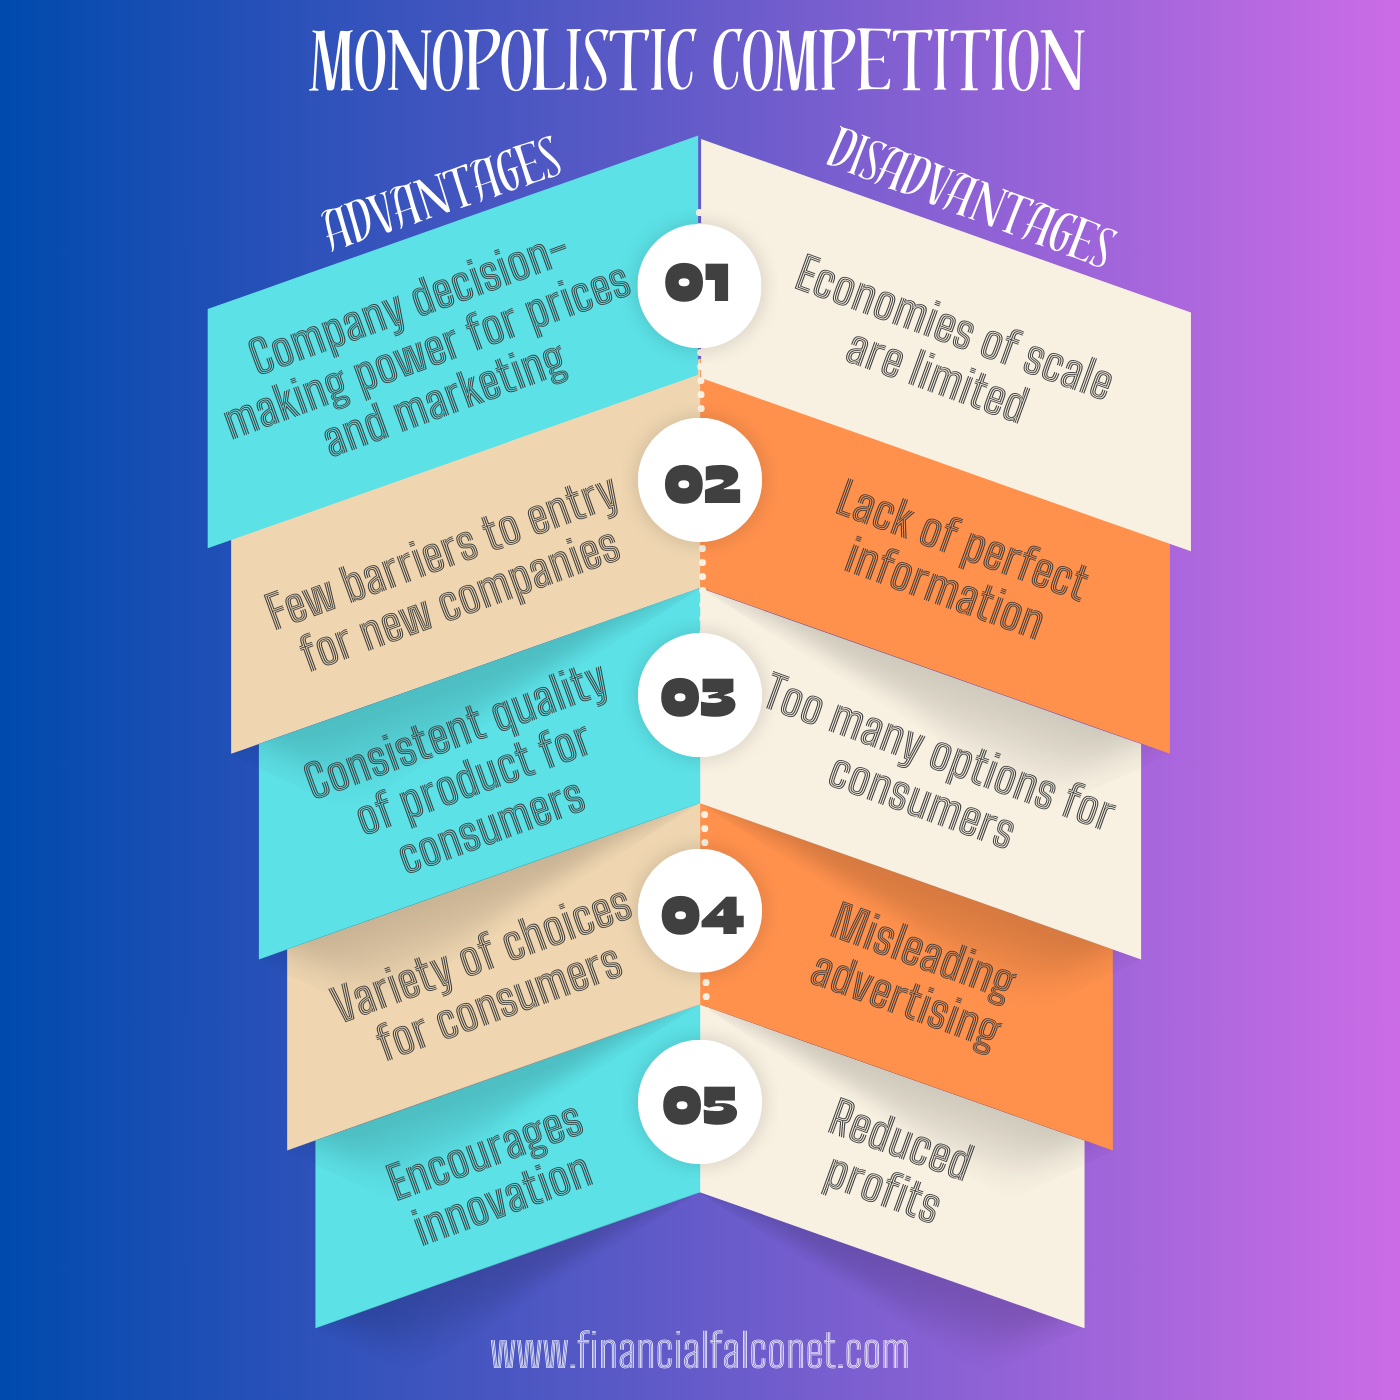 Advantages and disadvantages of monopolistic competition